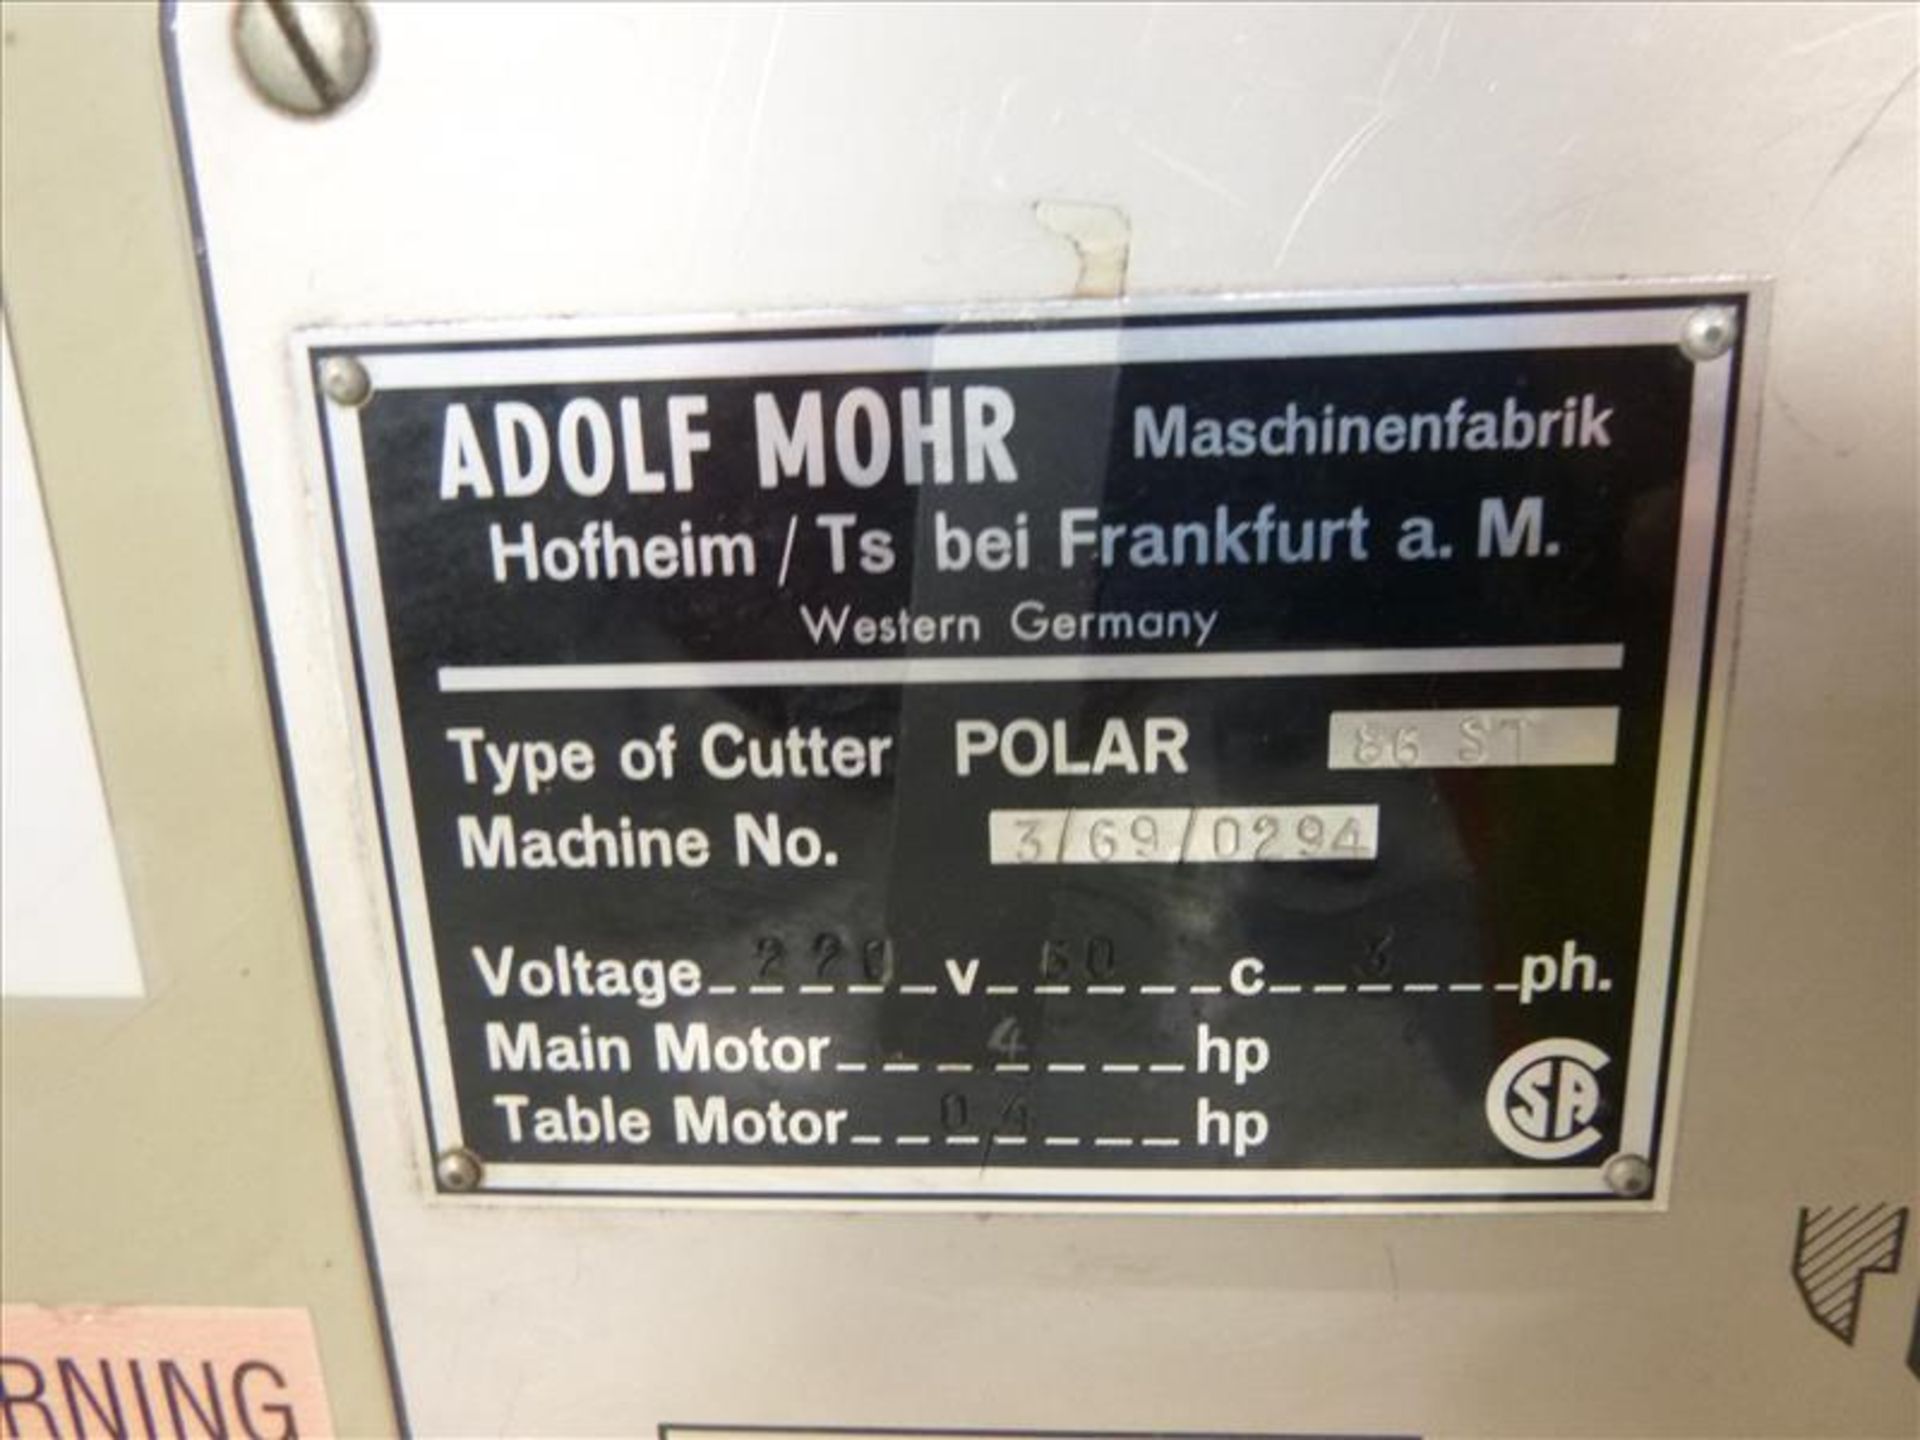 Polar-Mohr Standard 86 paper cutter, mod. 86ST, ser. no. 3/69/0294 [Mail Room, 1st Floor] - Image 5 of 5